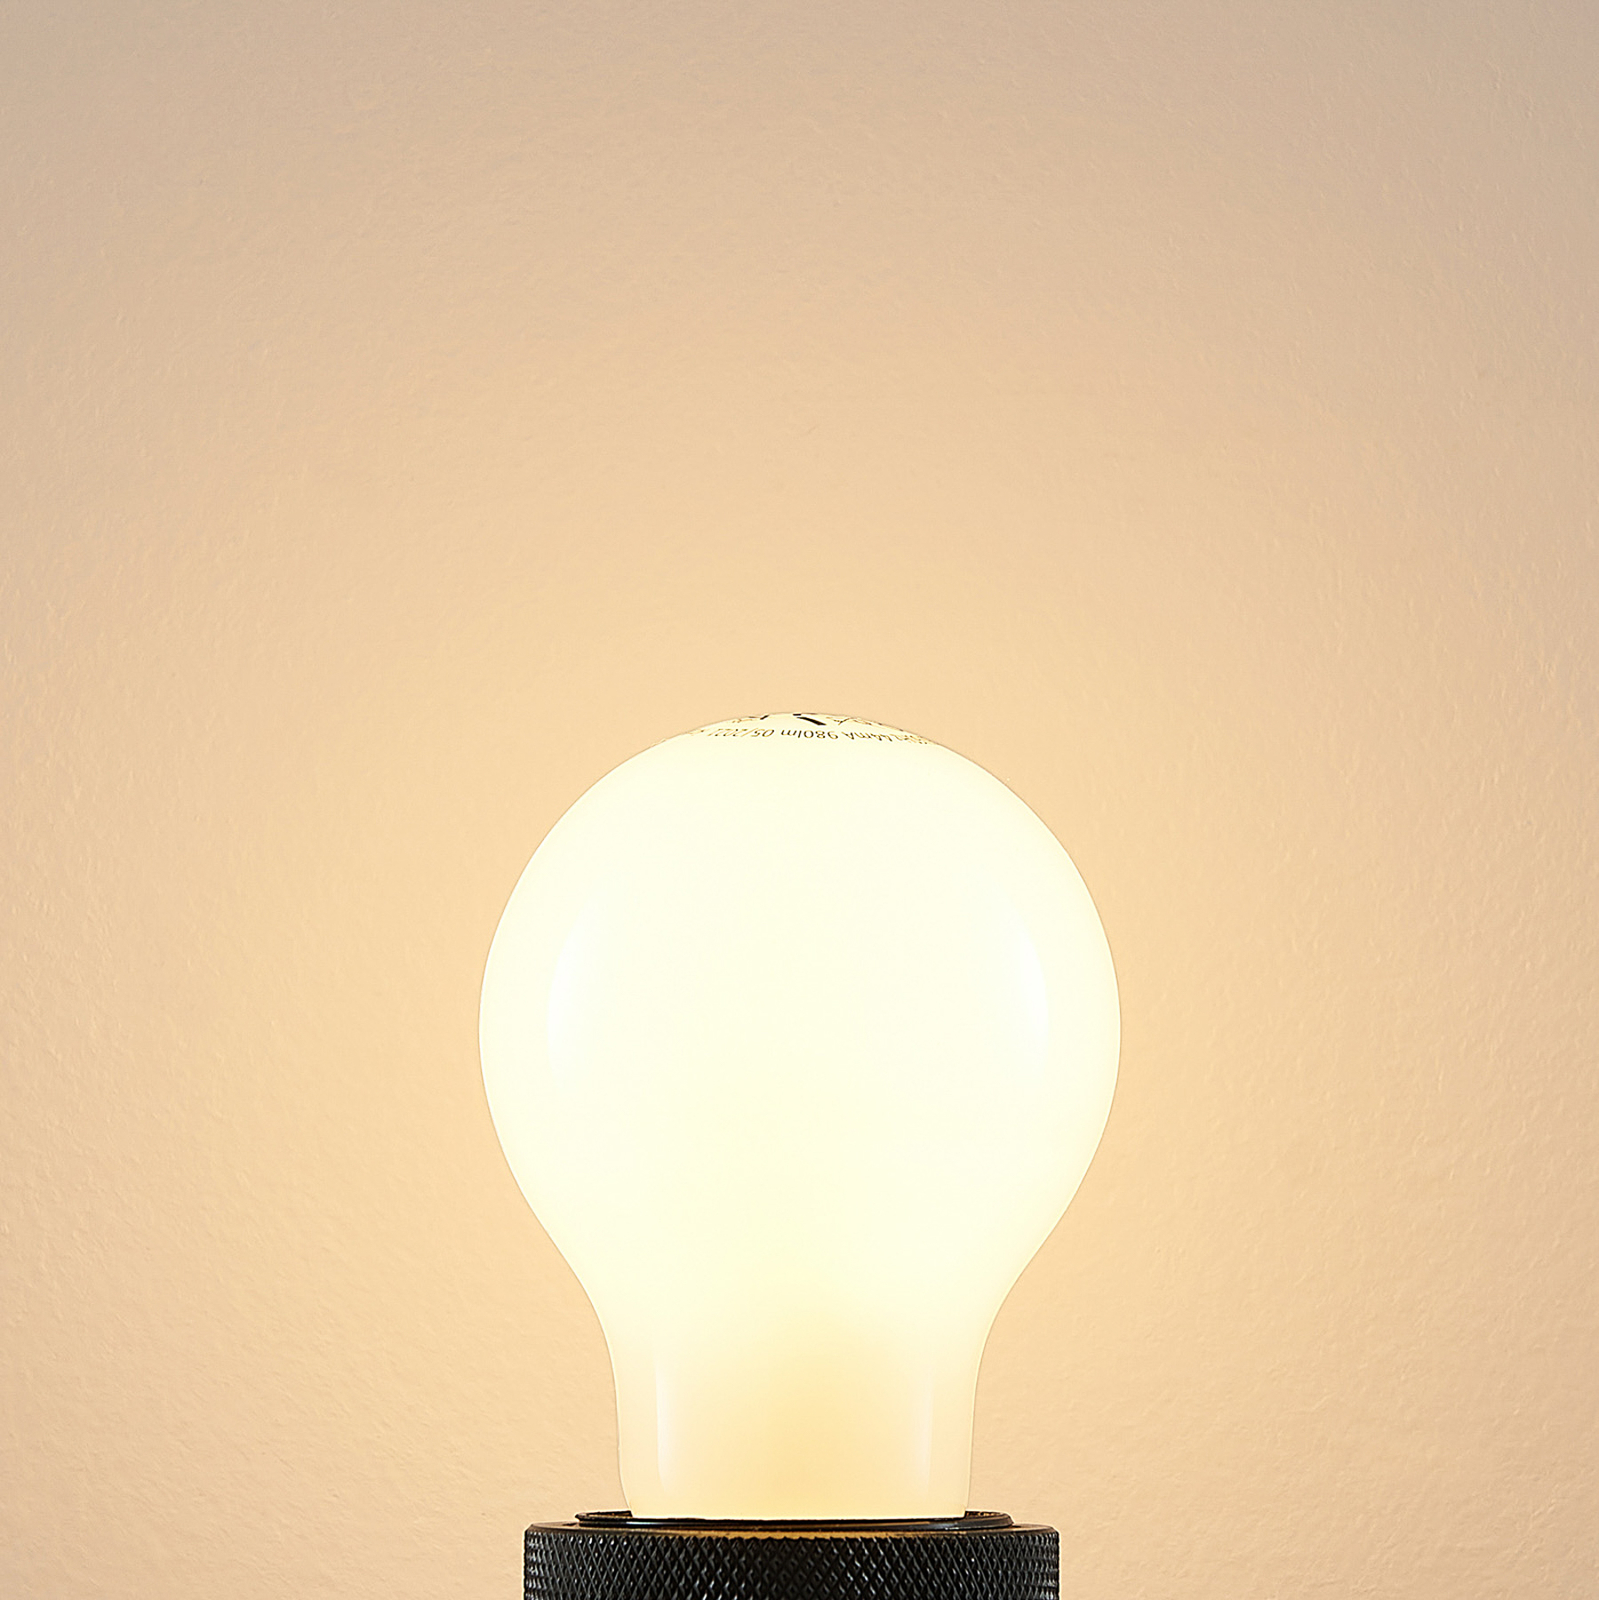 LED bulb E27 8 W 2,700 K dimmable opal 3-pack